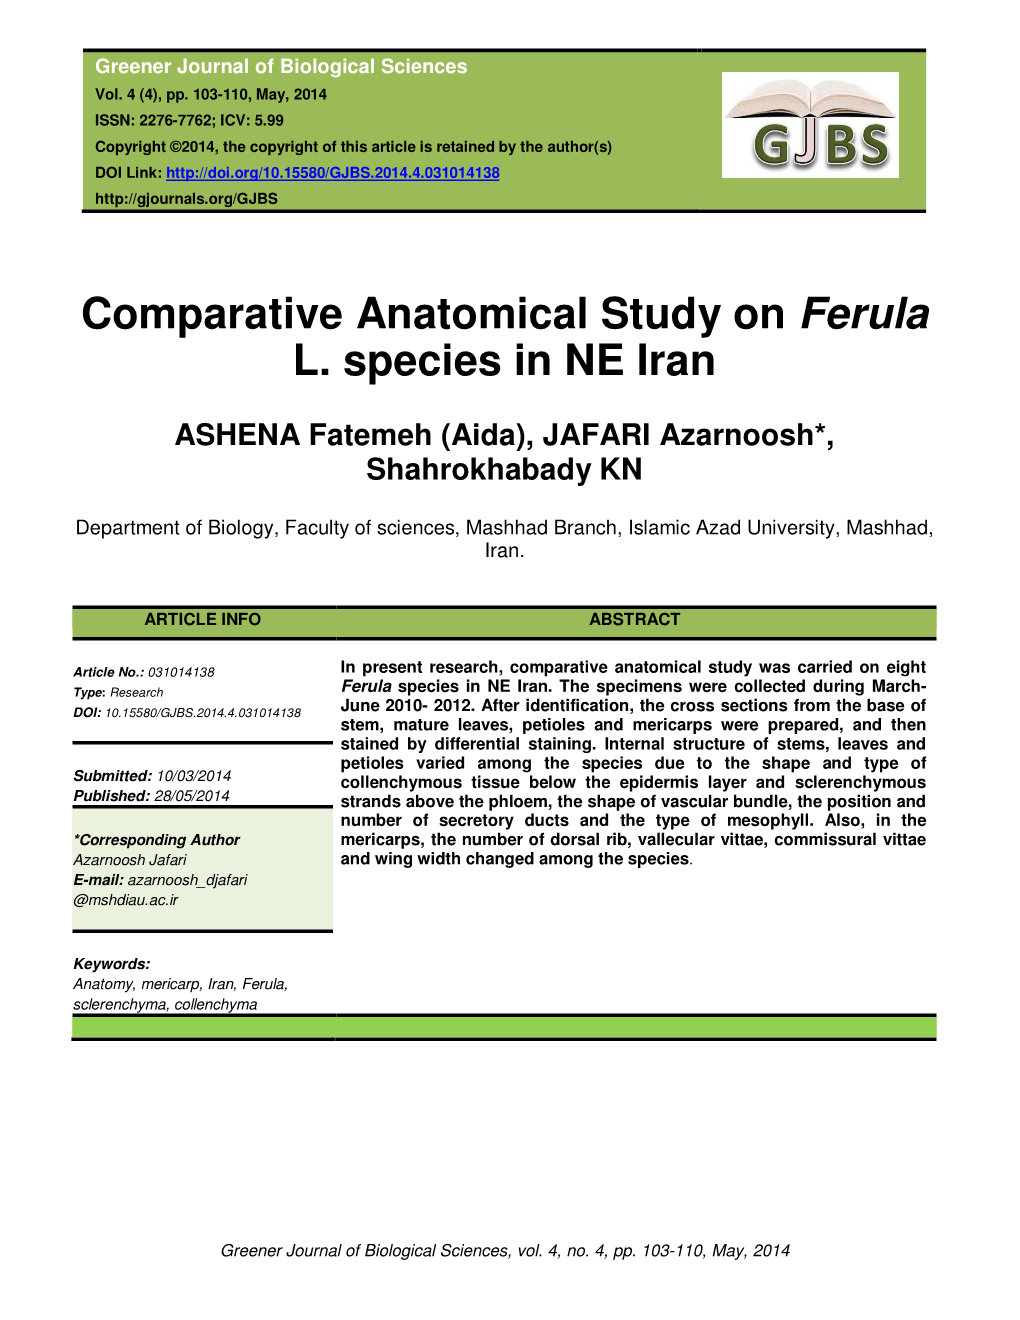 Comparative Anatomical Study on Ferula L. Species in NE Iran